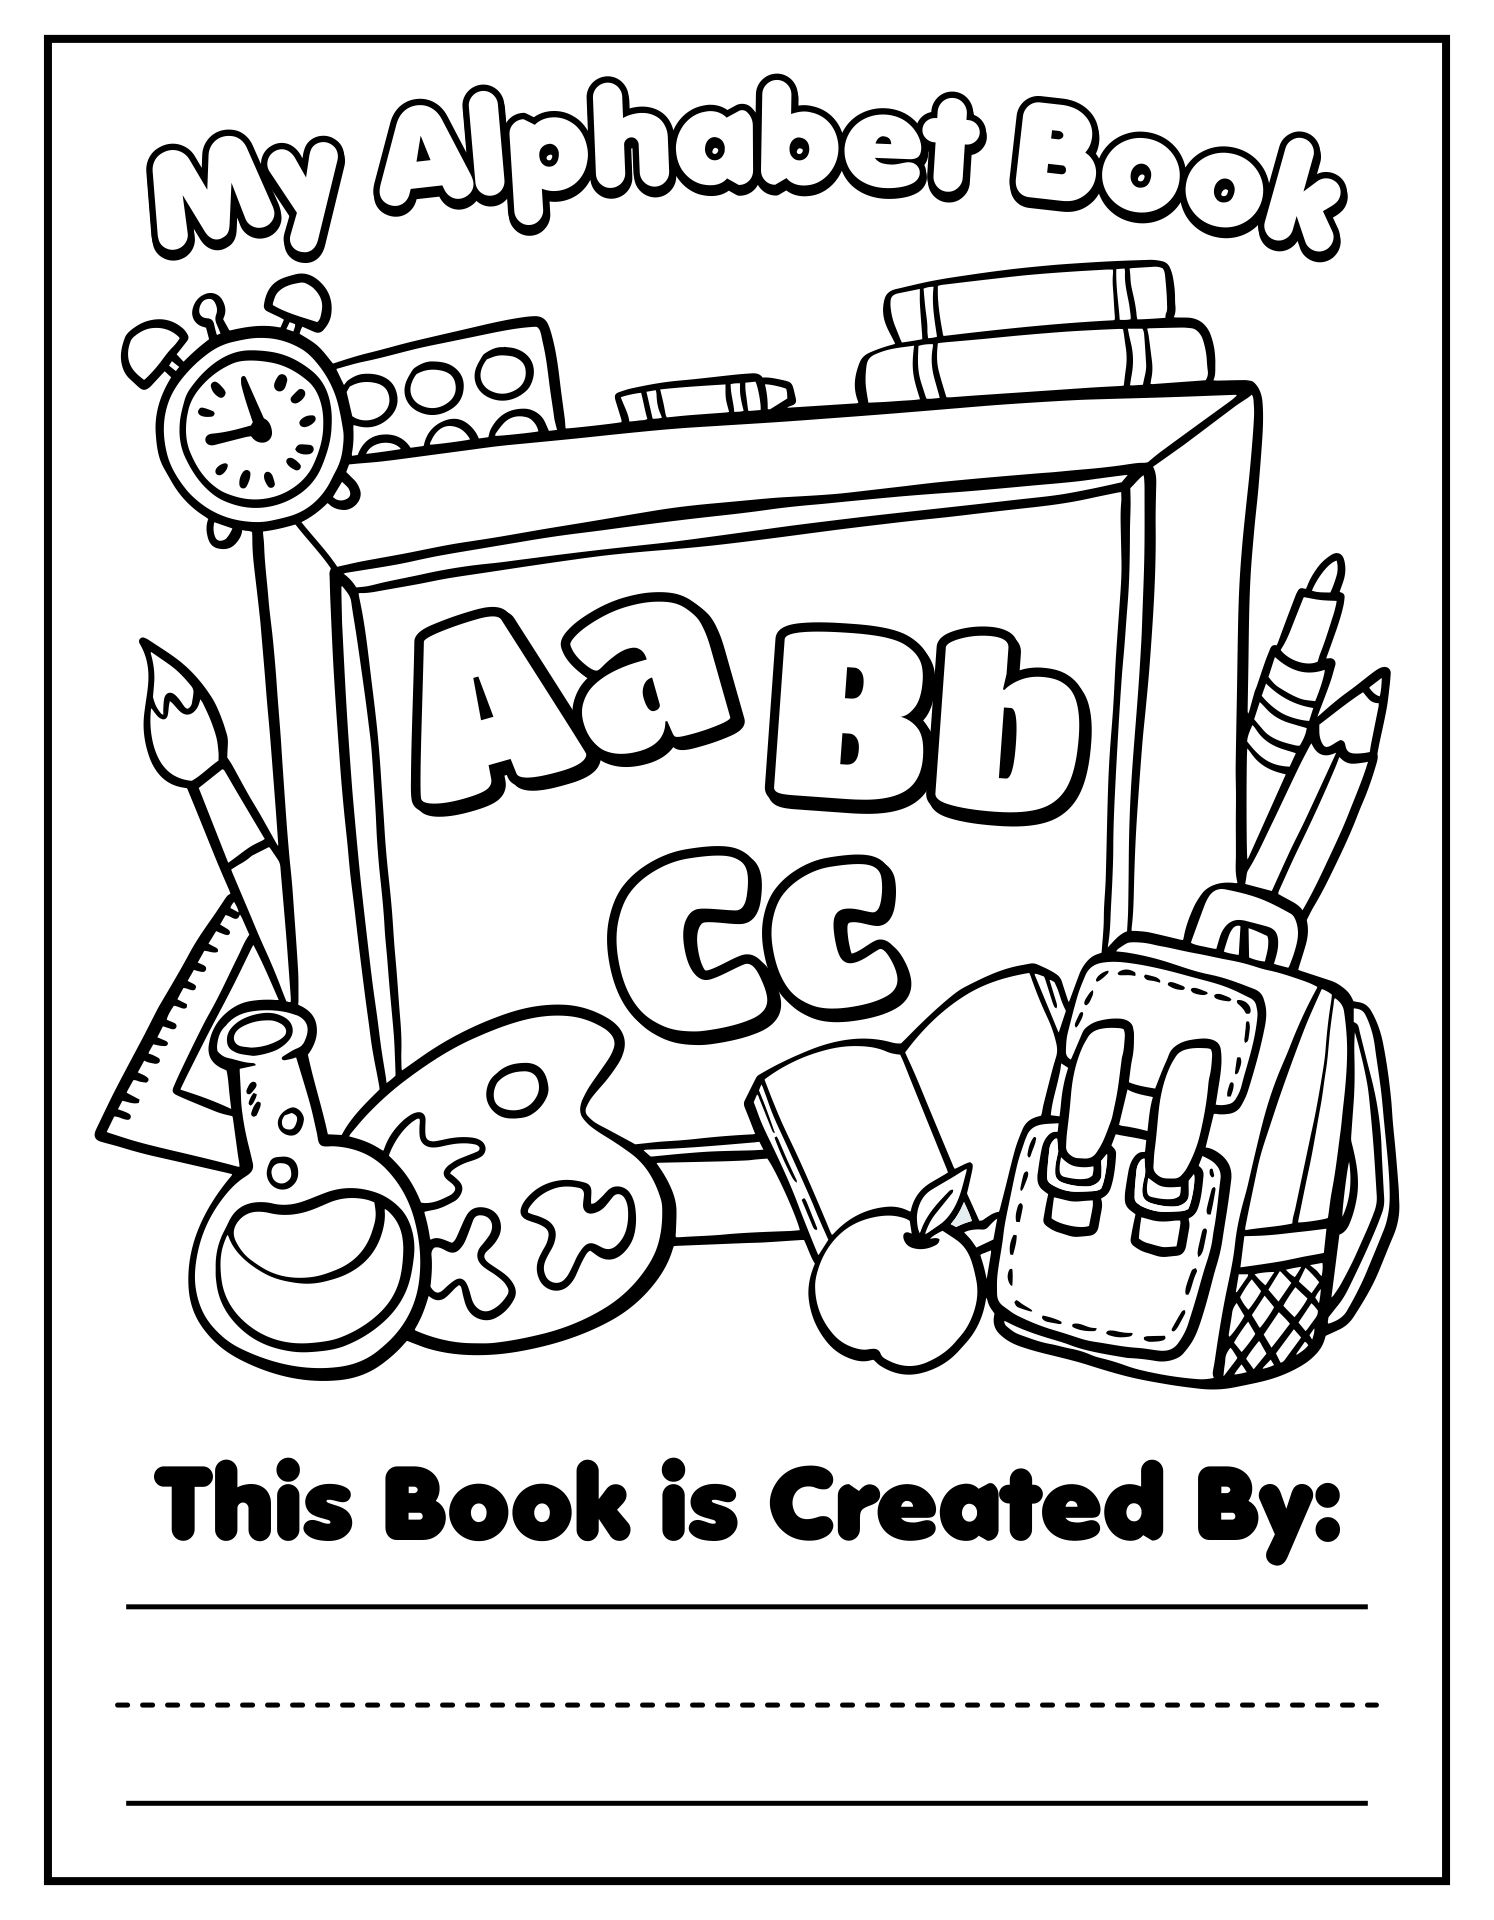 abc-book-cover-page-printable-reverasite